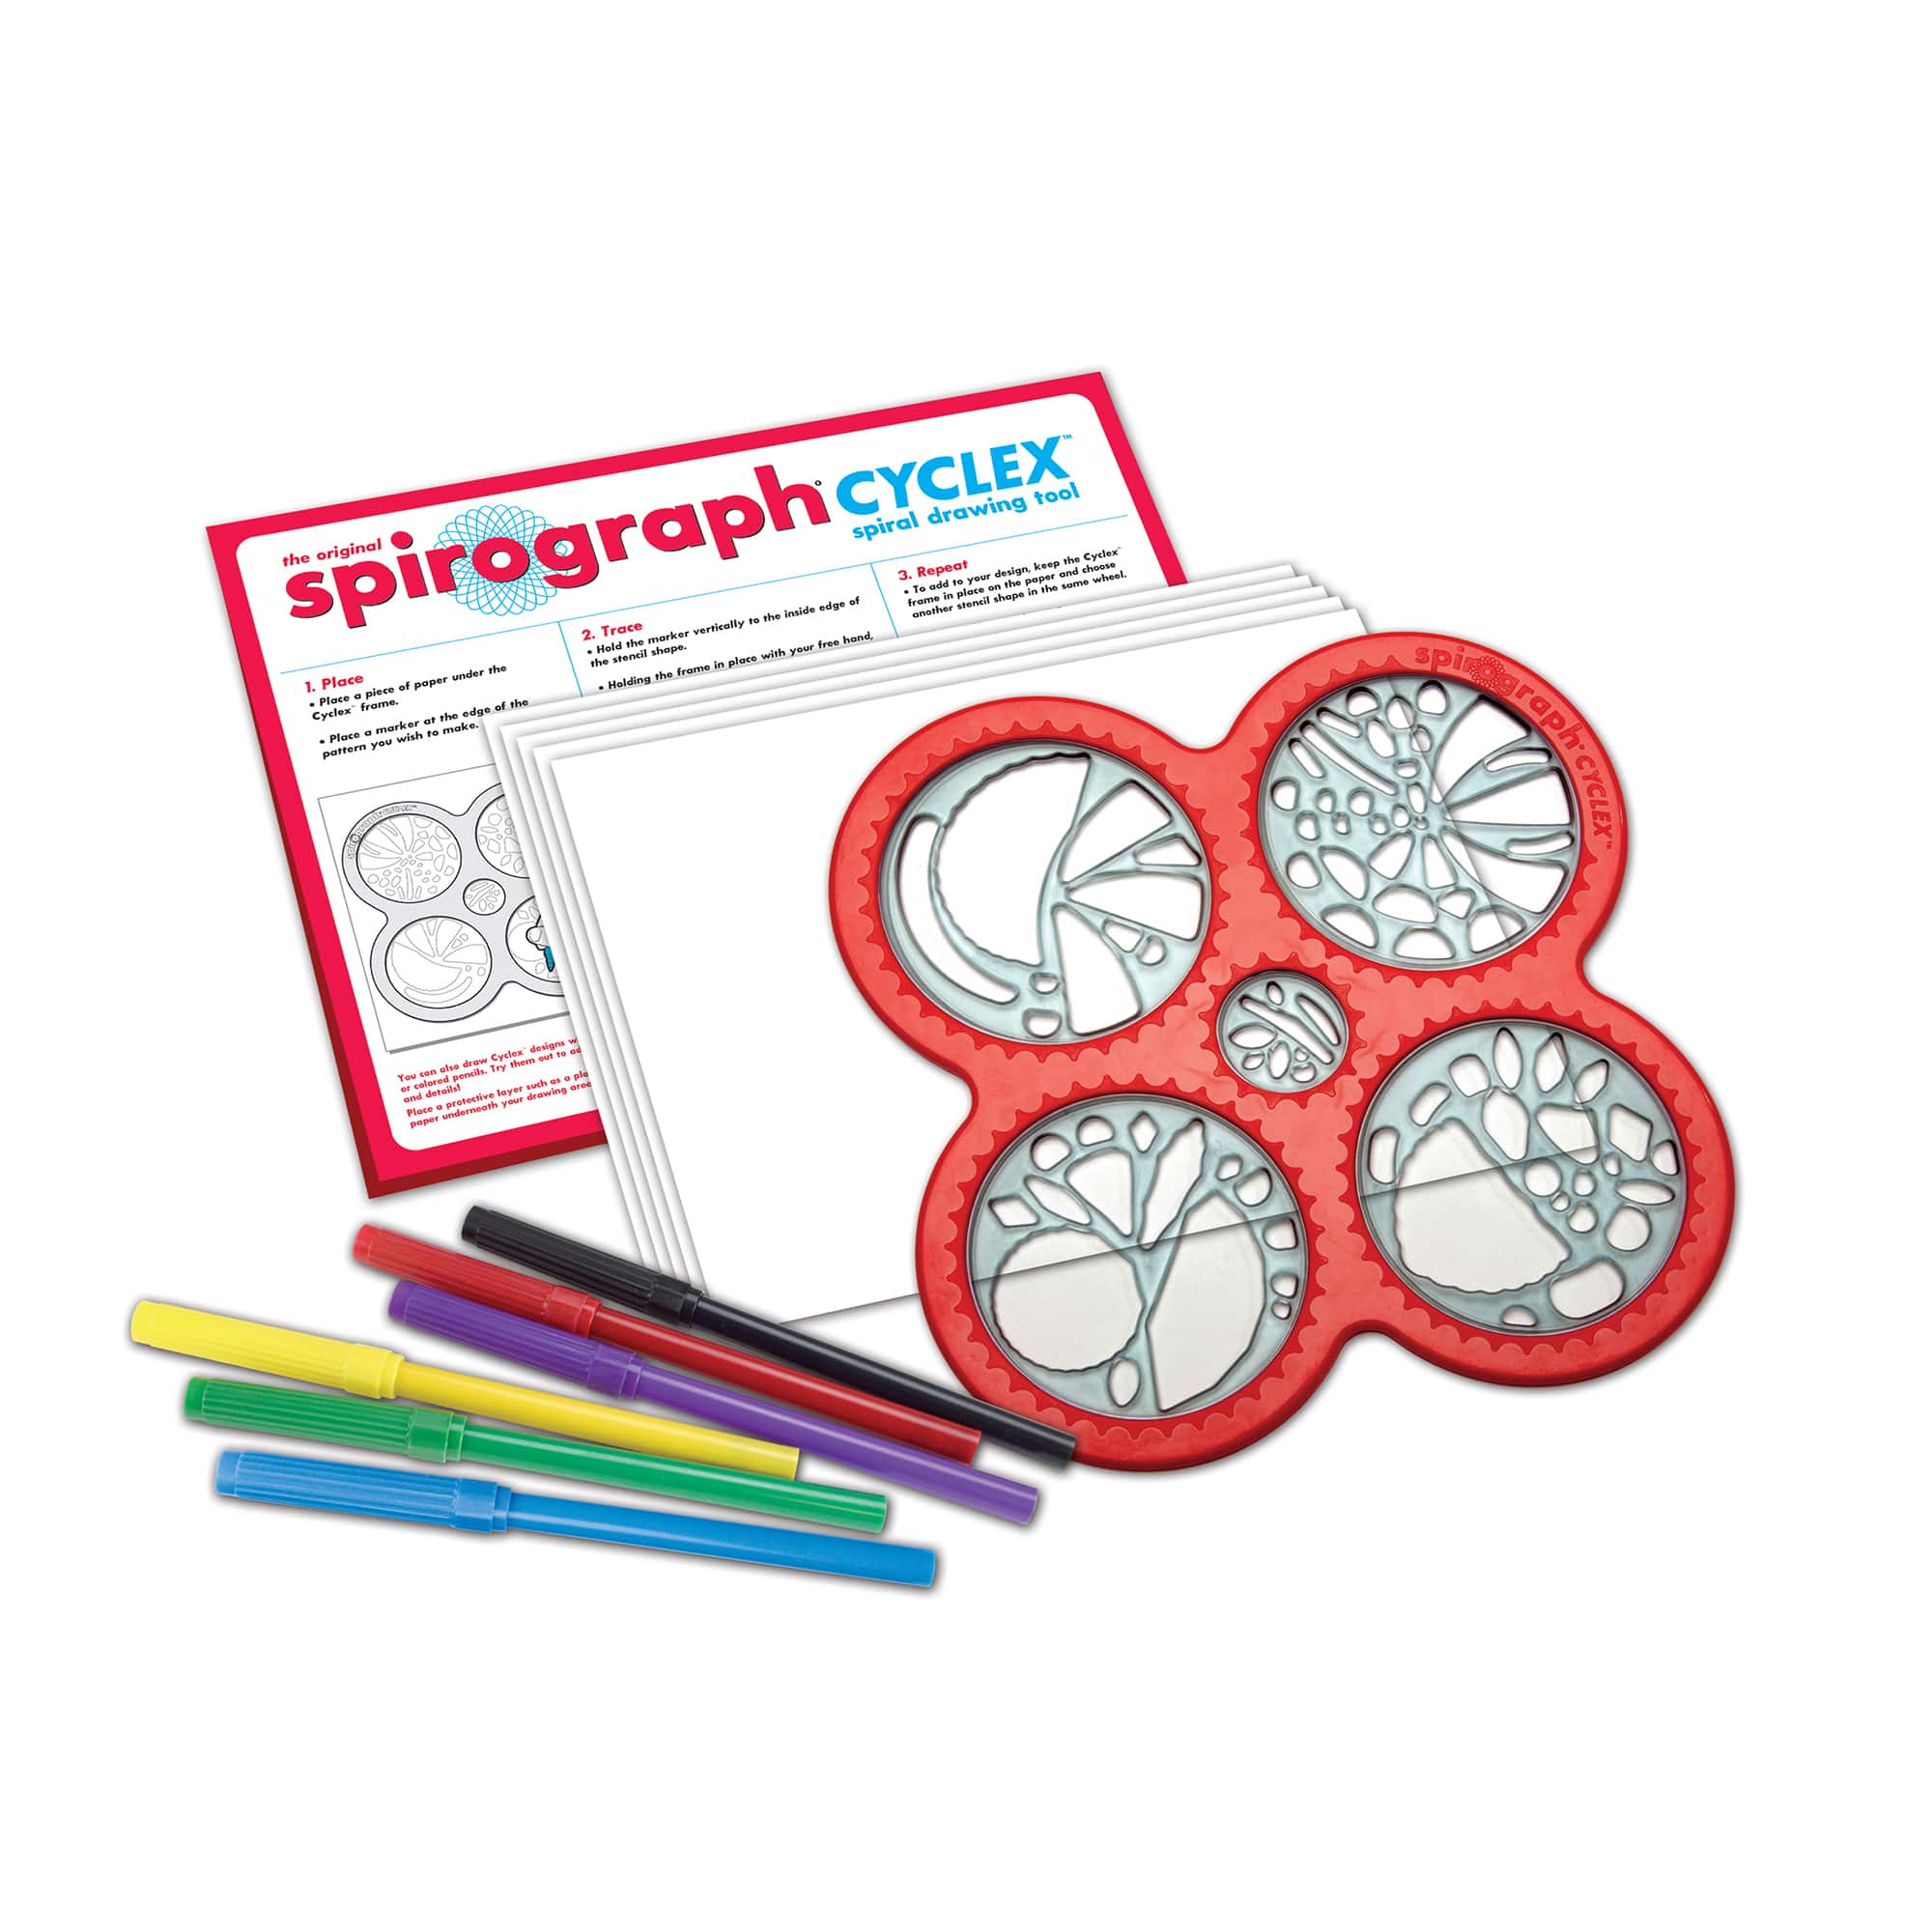 The Original Spirograph&#xAE; Cyclex&#x2122; Spiral Drawing Tool